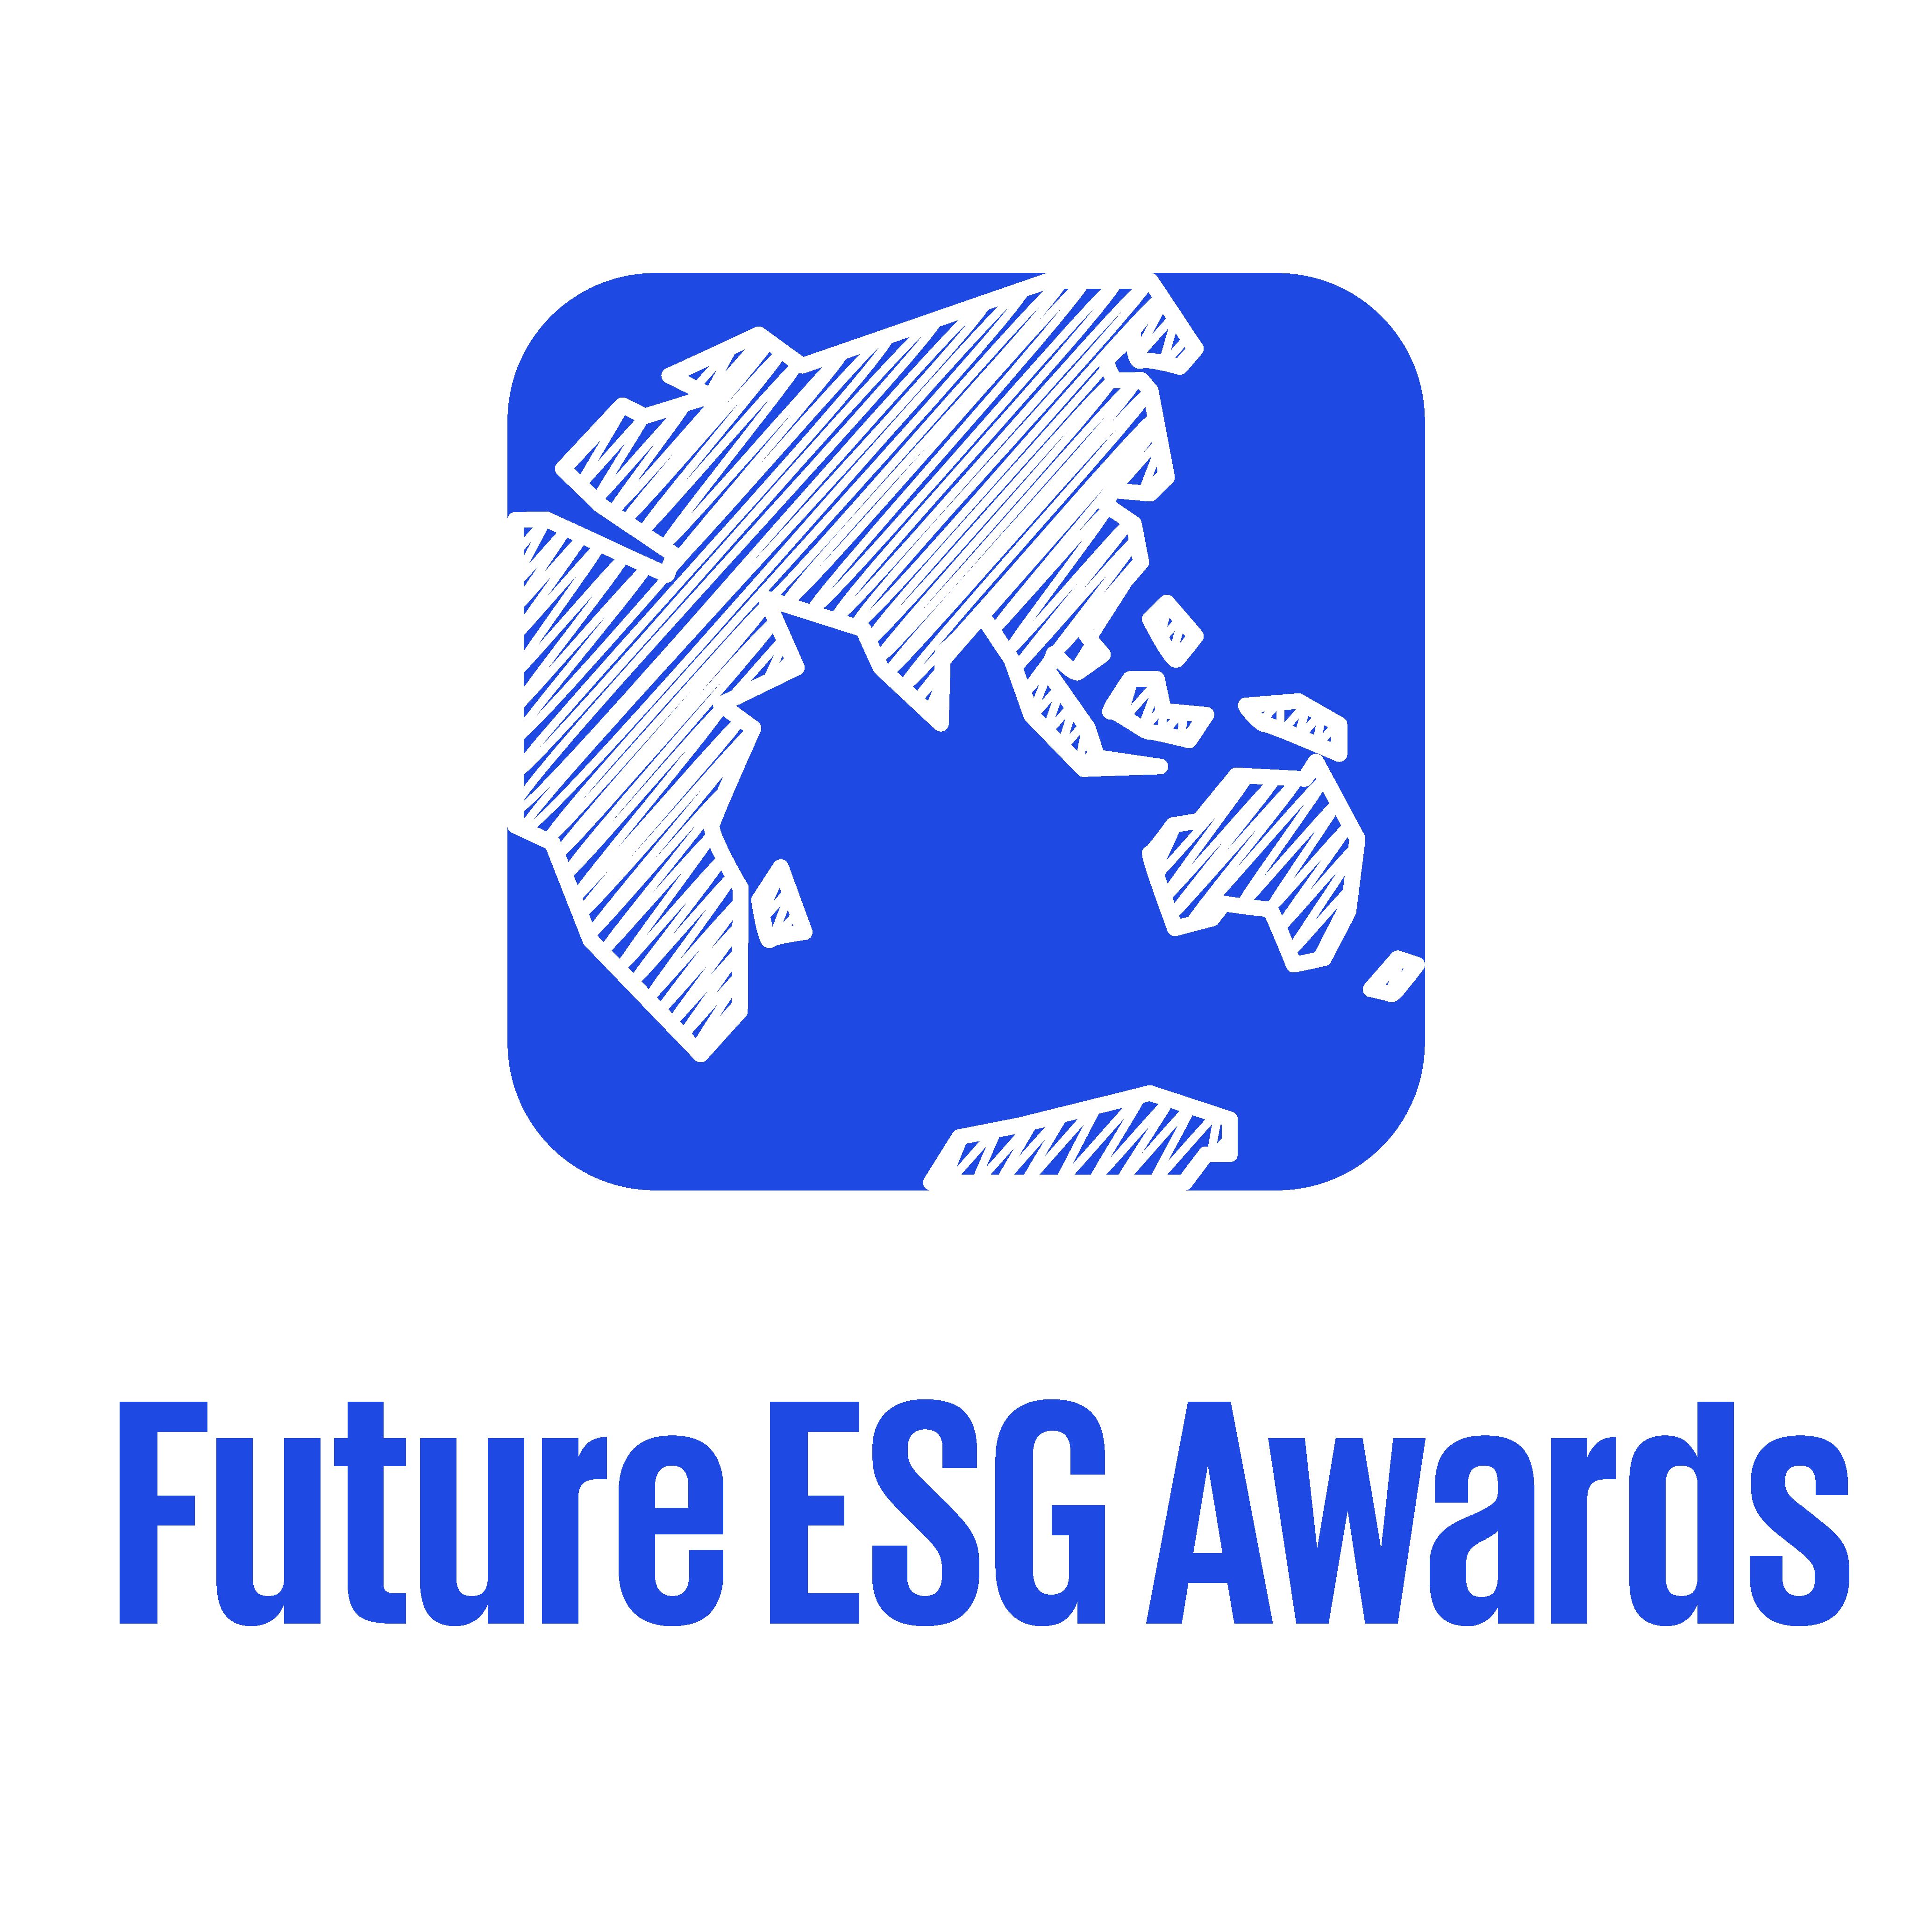 Future ESG Awards